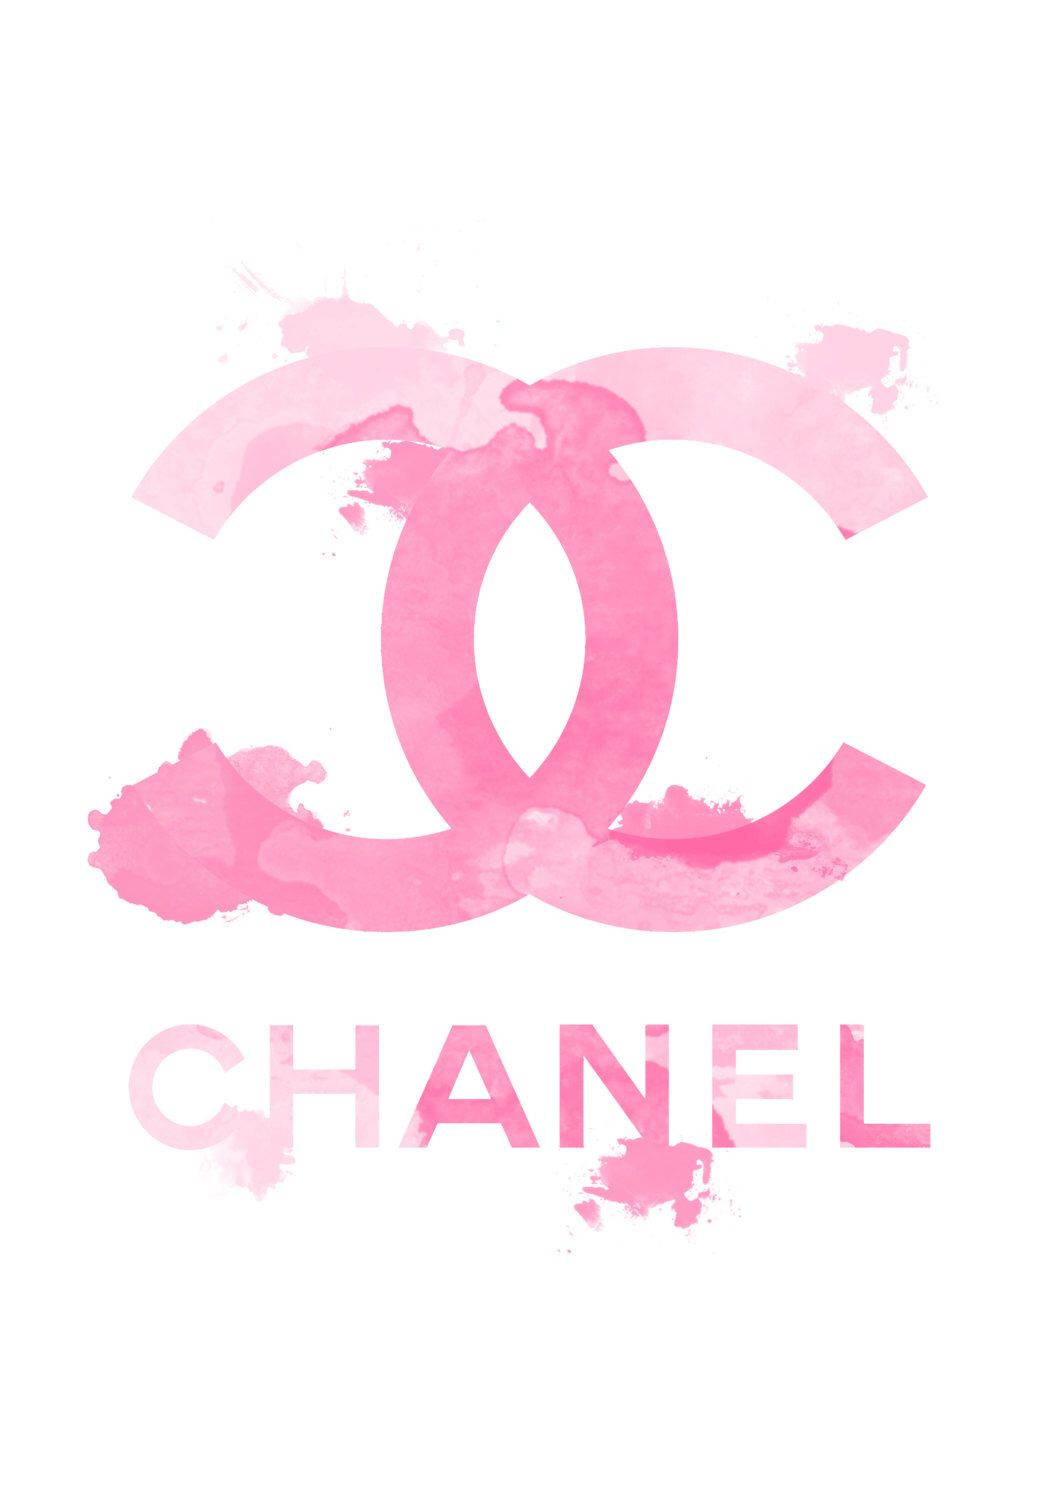 Umsímbolo Brilhante Em Rosa Chanel Que Representa A Marca De Moda Luxuosa. Papel de Parede